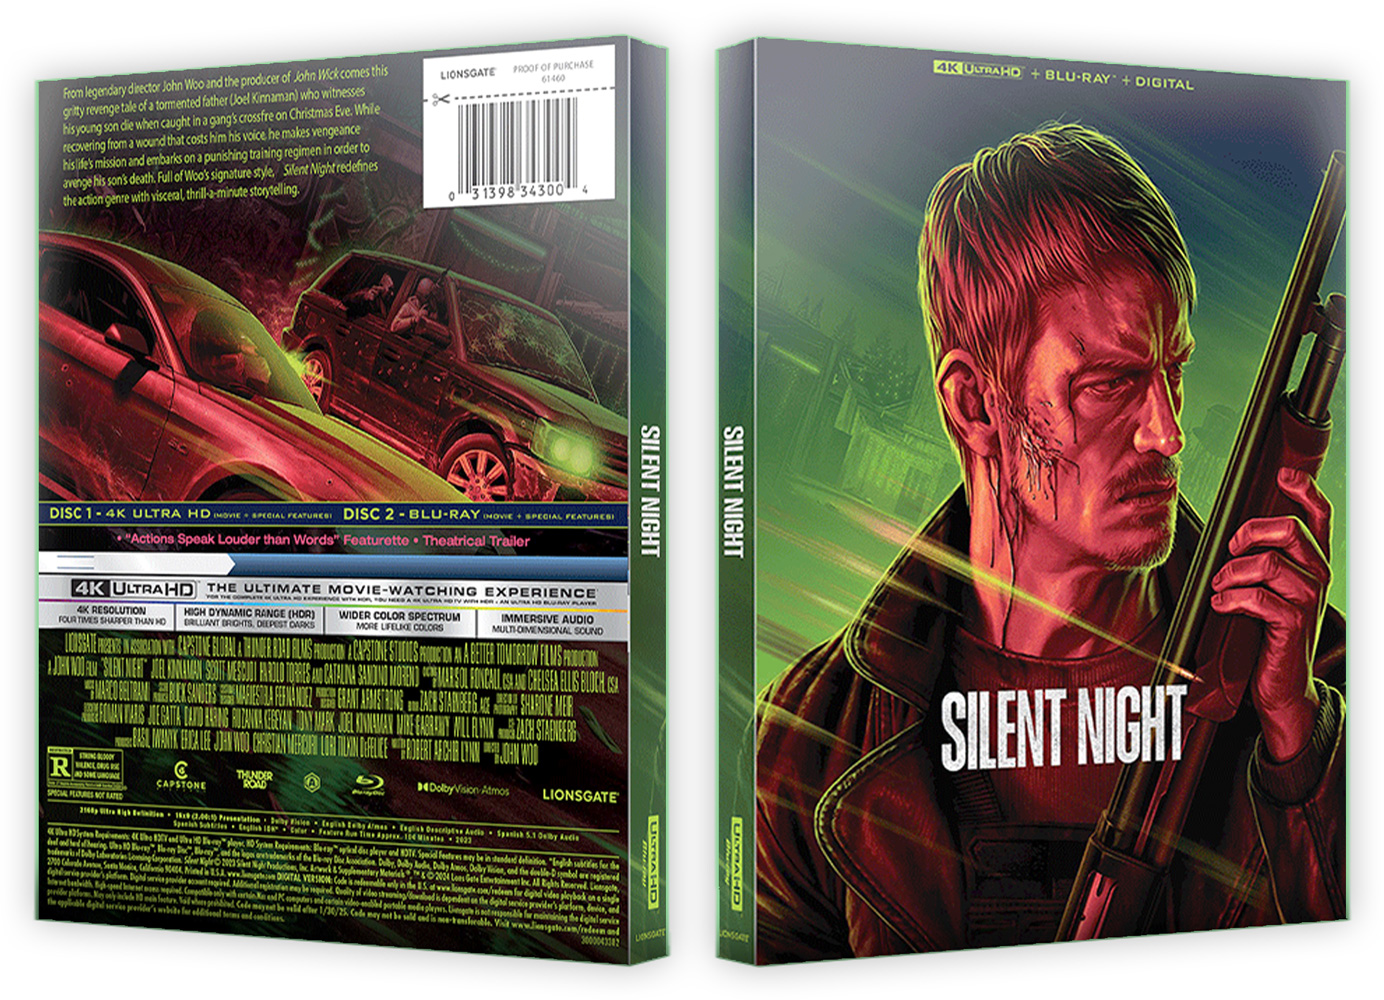 Silent Night – Official steelbook artwork